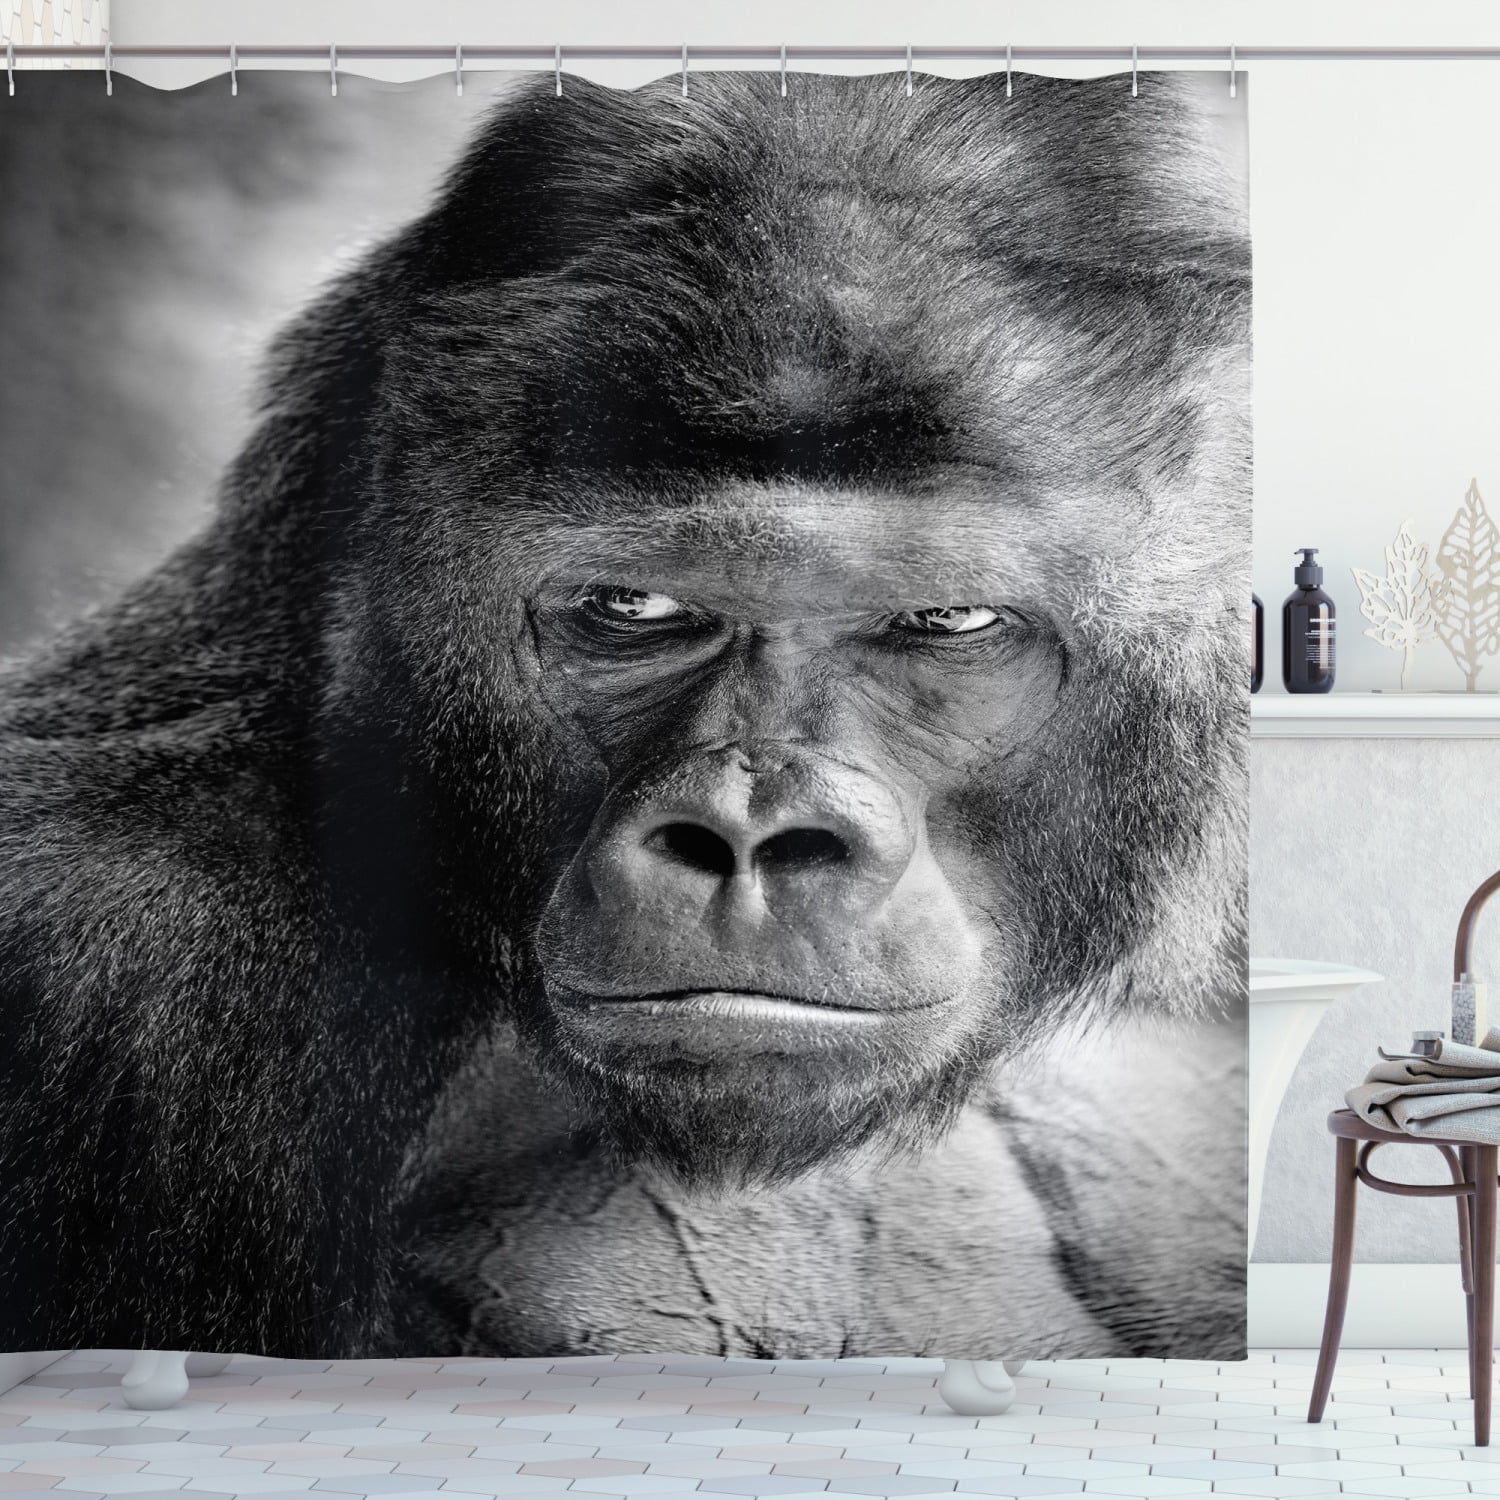 Gorilla Monkey Animal Shower Curtain Bathroom Decor Waterproof Fabric & 12 Hooks 